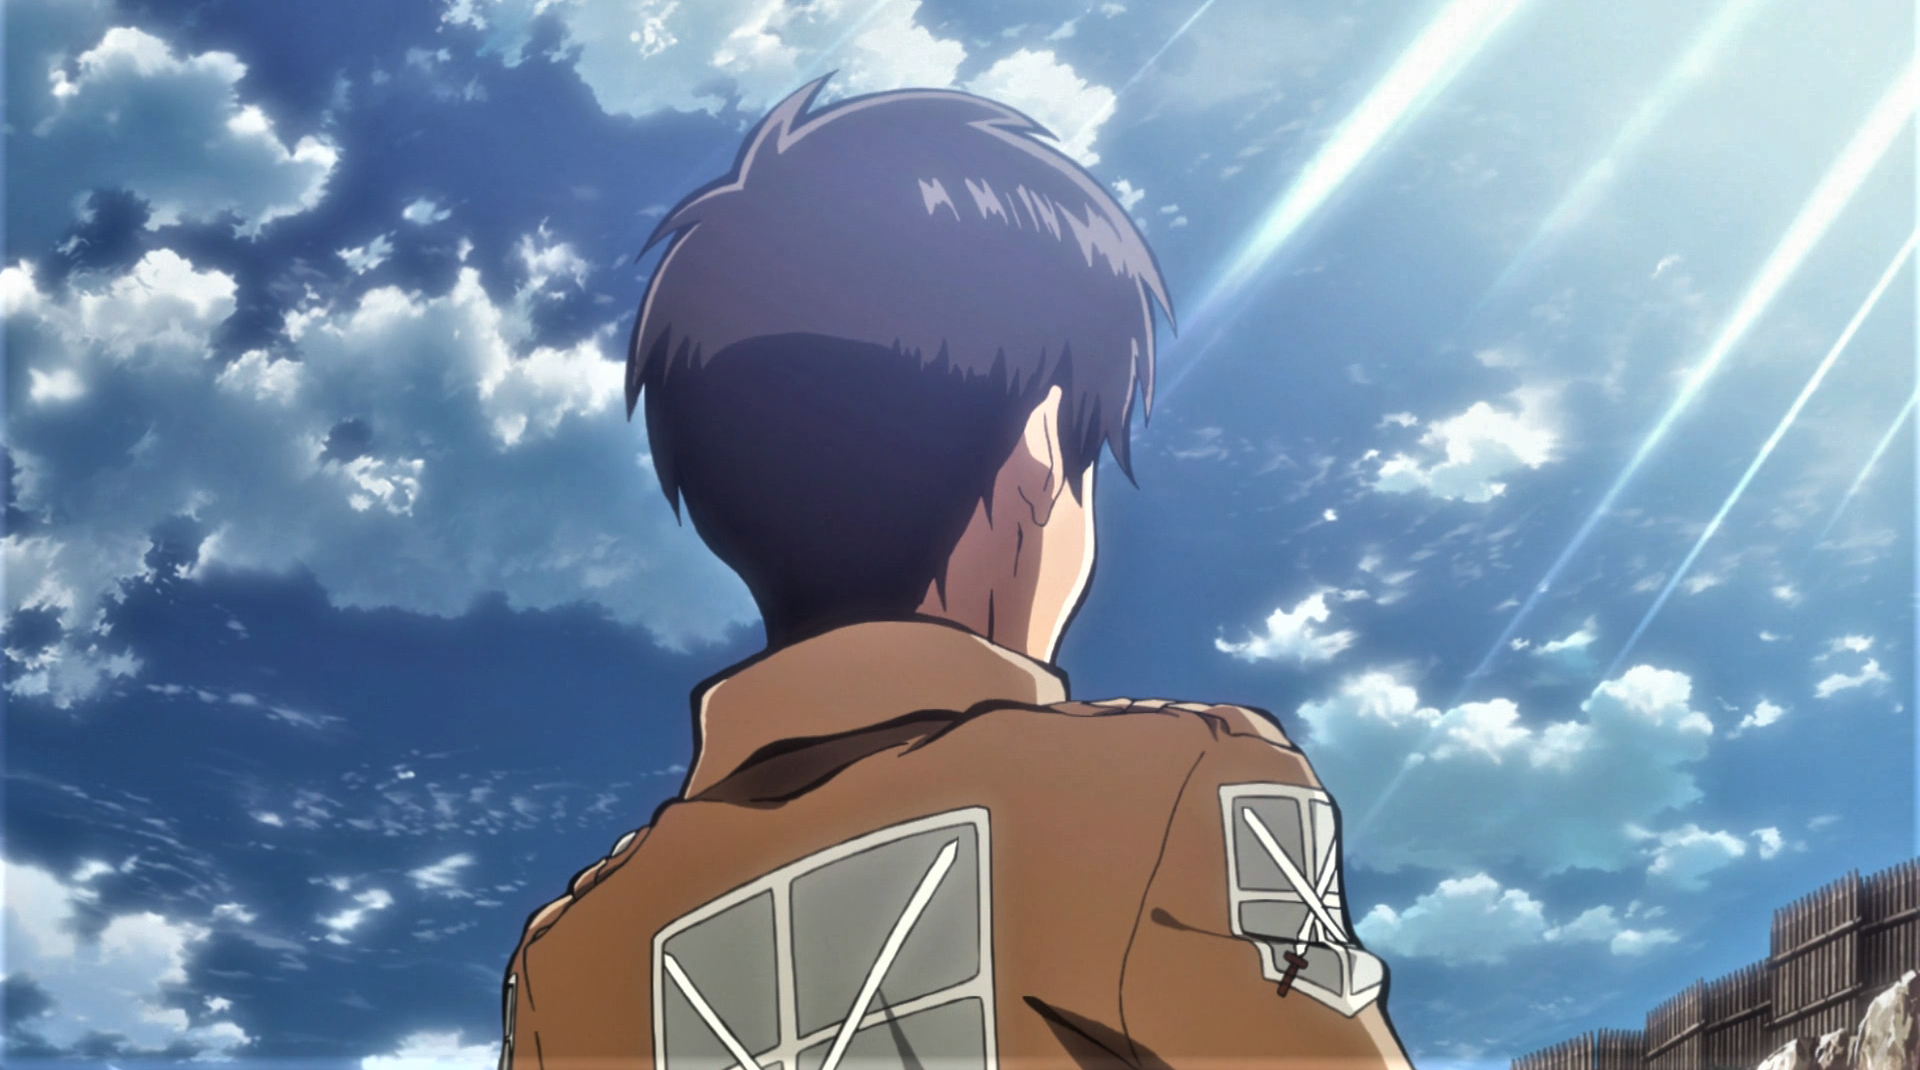 Anime 1920x1070 Shingeki no Kyojin Eren Jeager sword sunlight sky clouds anime Anime screenshot Scout Regiment uniform anime boys